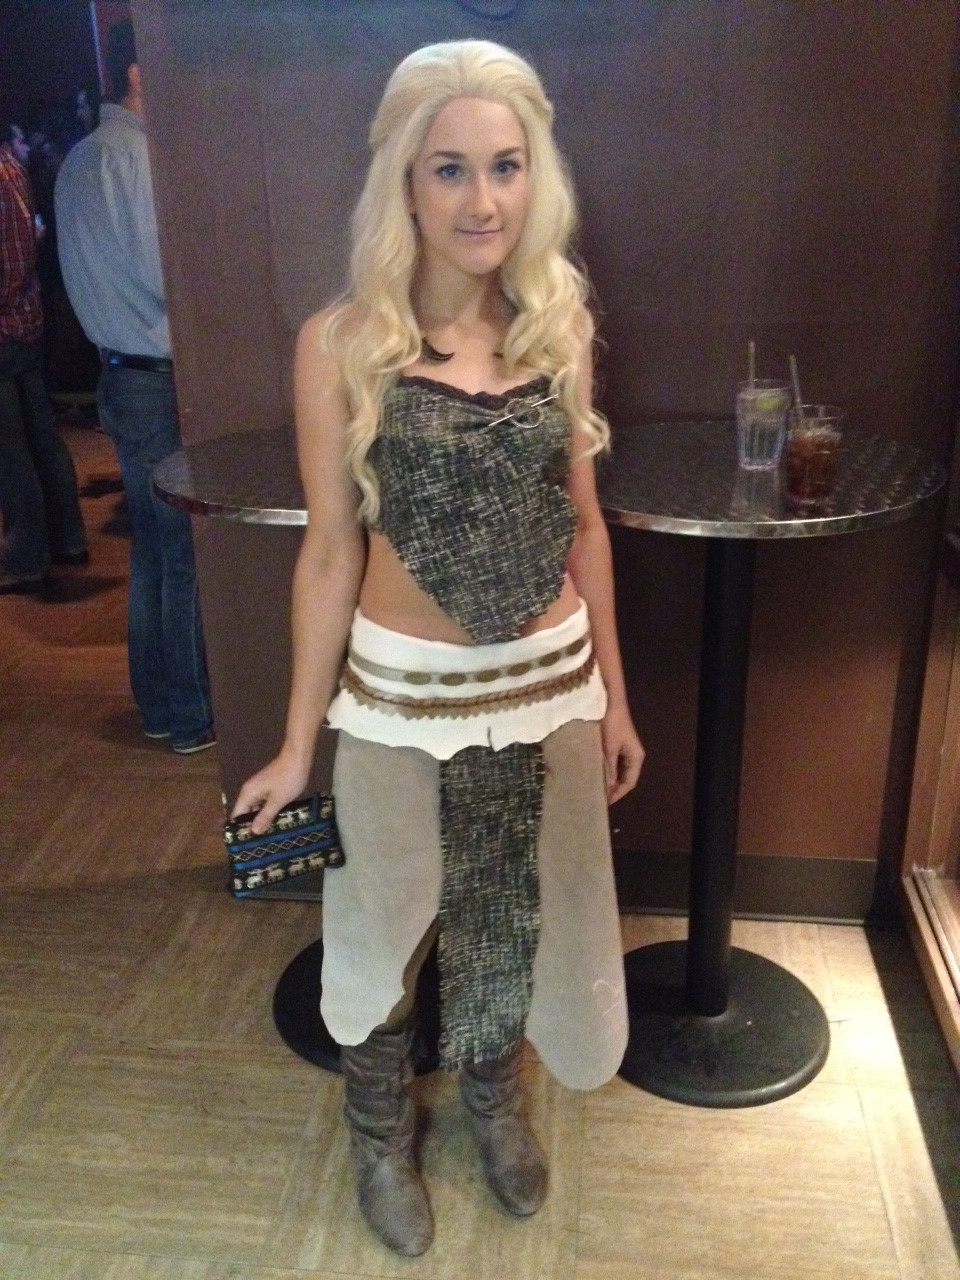 Best ideas about Khaleesi Costume DIY
. Save or Pin Daenerys Targaryen Khaleesi from Game of Thrones Costume Now.